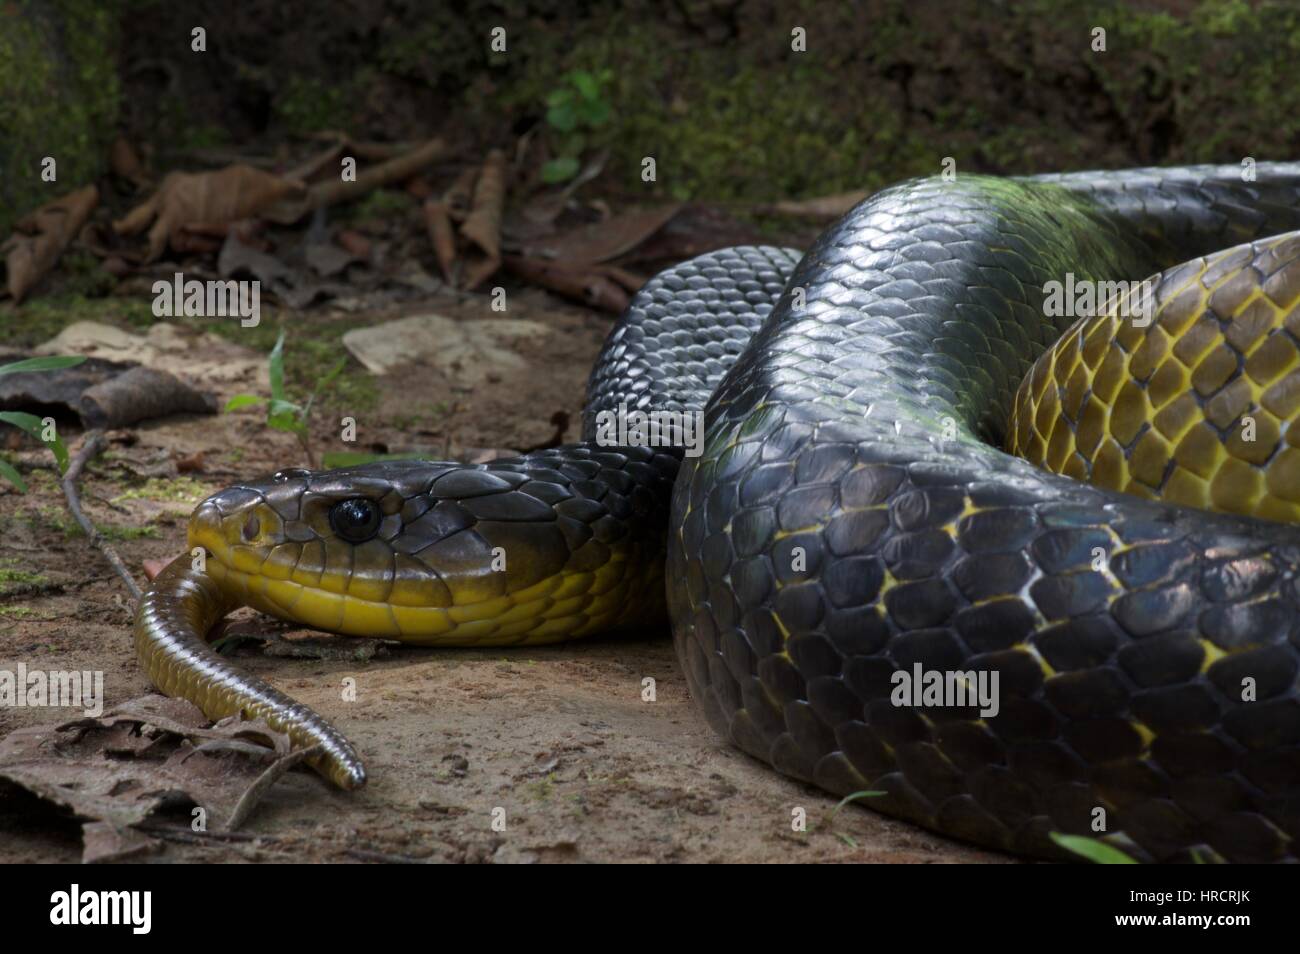 A huge Yellow-tailed Indigo Snake (Drymarchon corais) coiled on the Amazon rainforest floor in Loreto, Peru Stock Photo